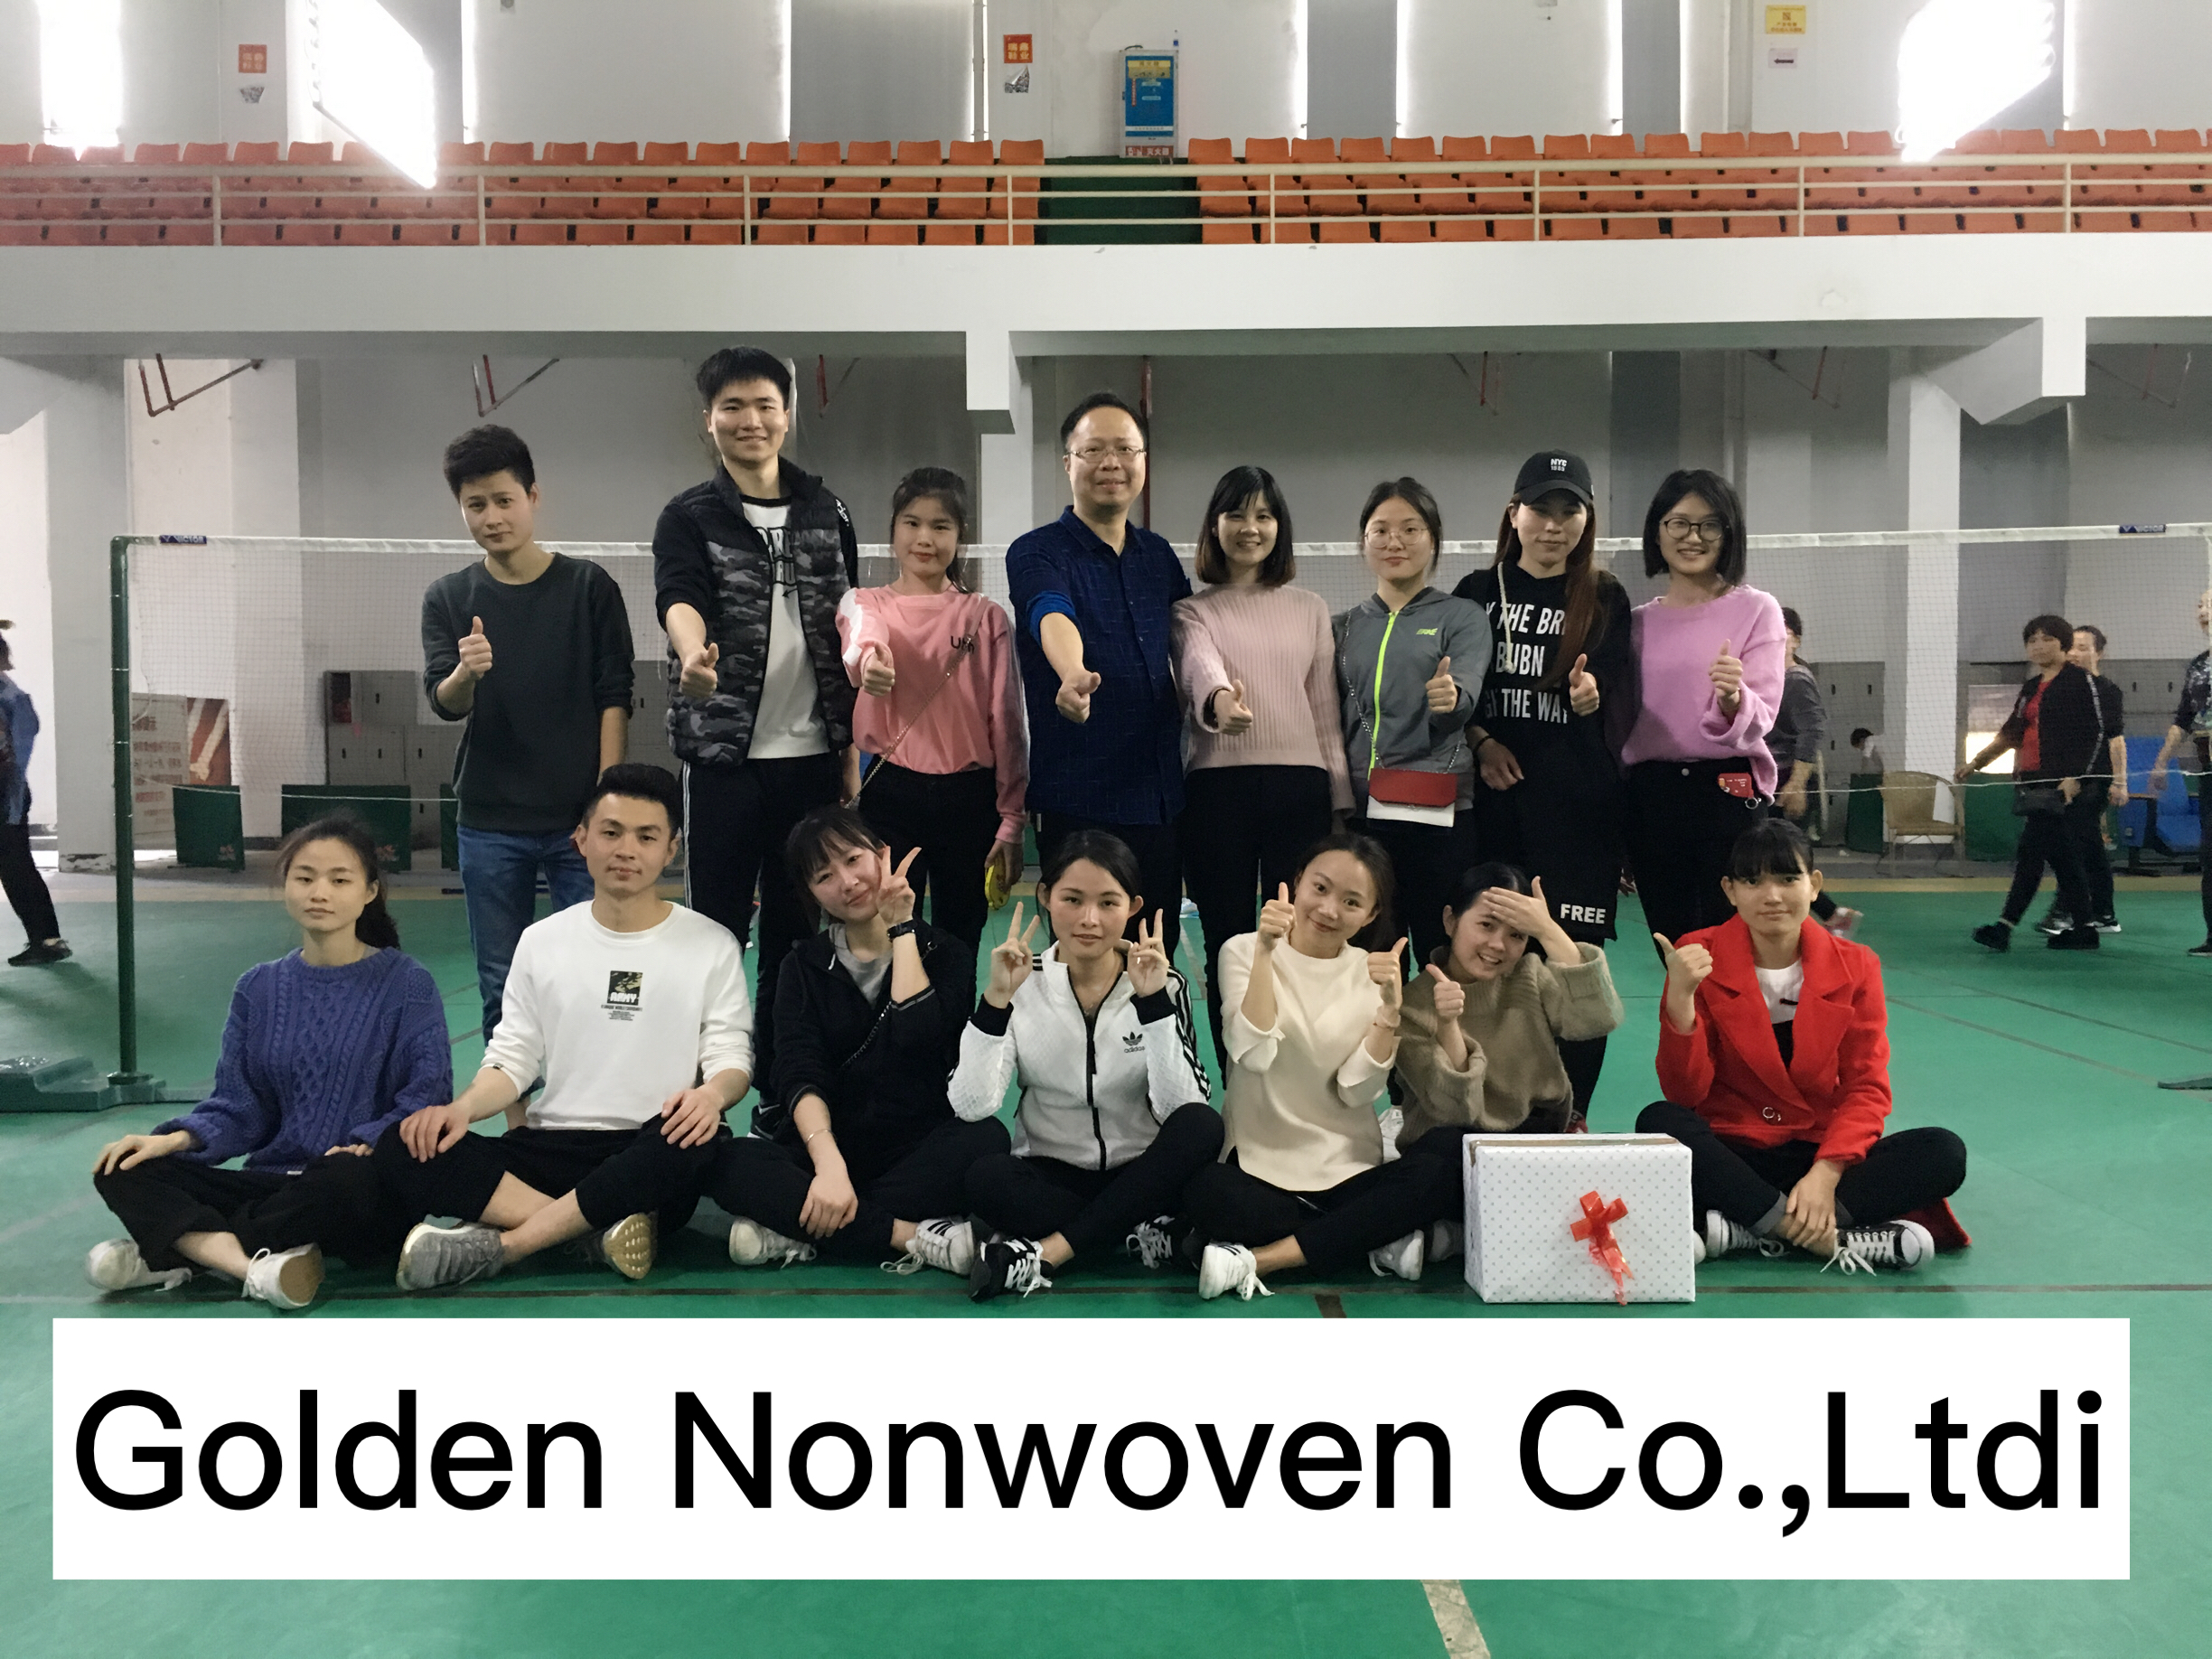 Golden Nonwoven Company Team Activity